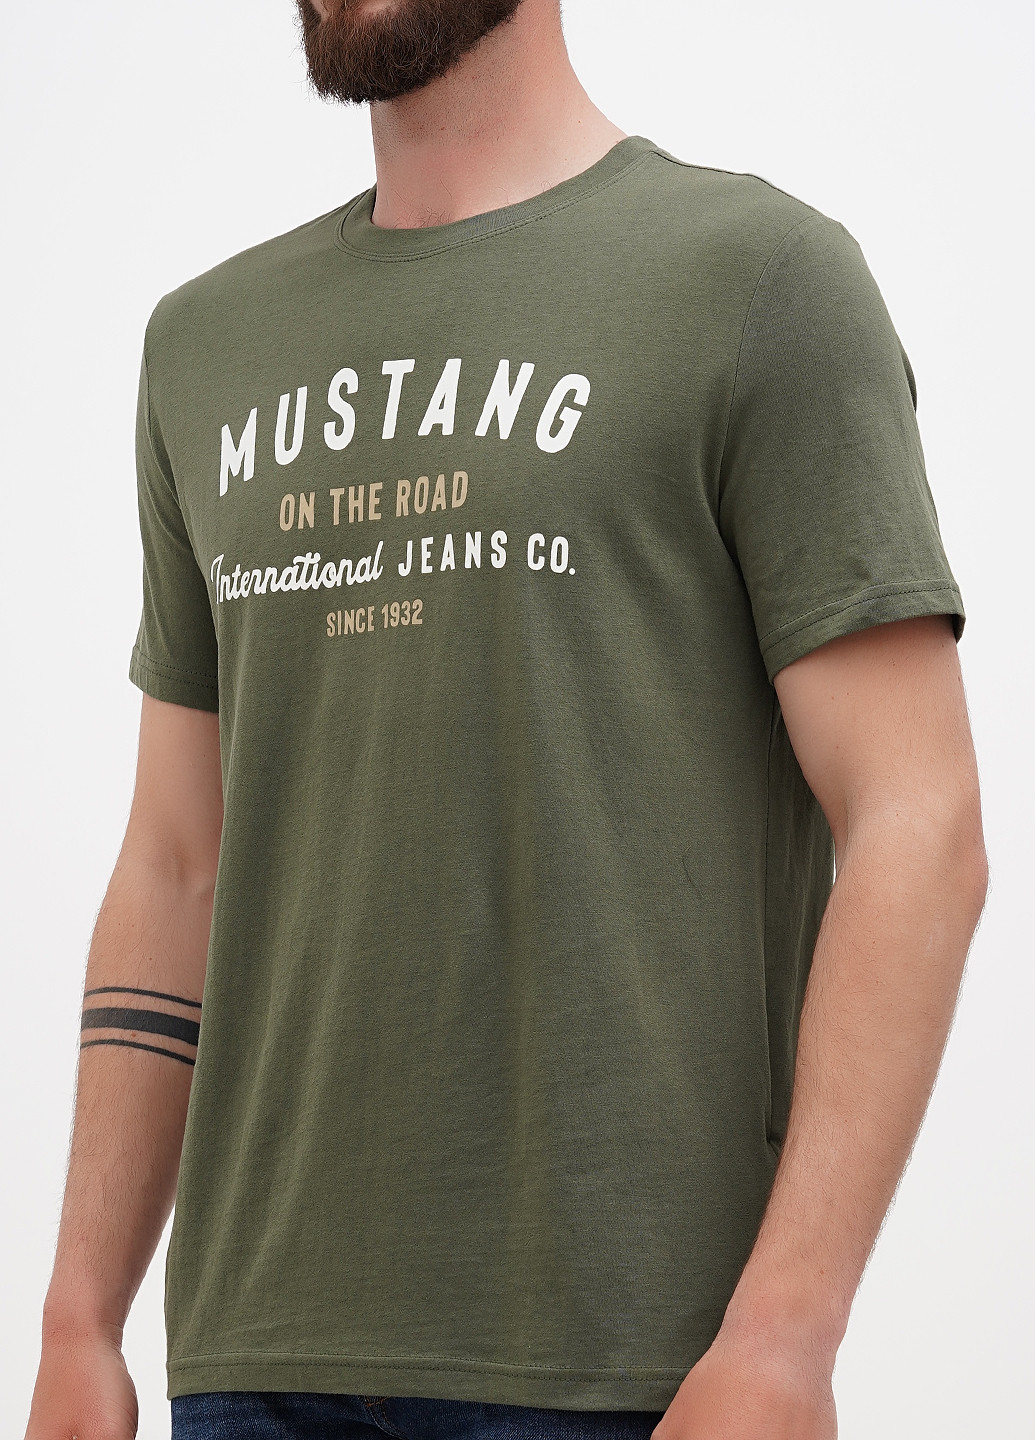 Хаки (оливковая) футболка Mustang